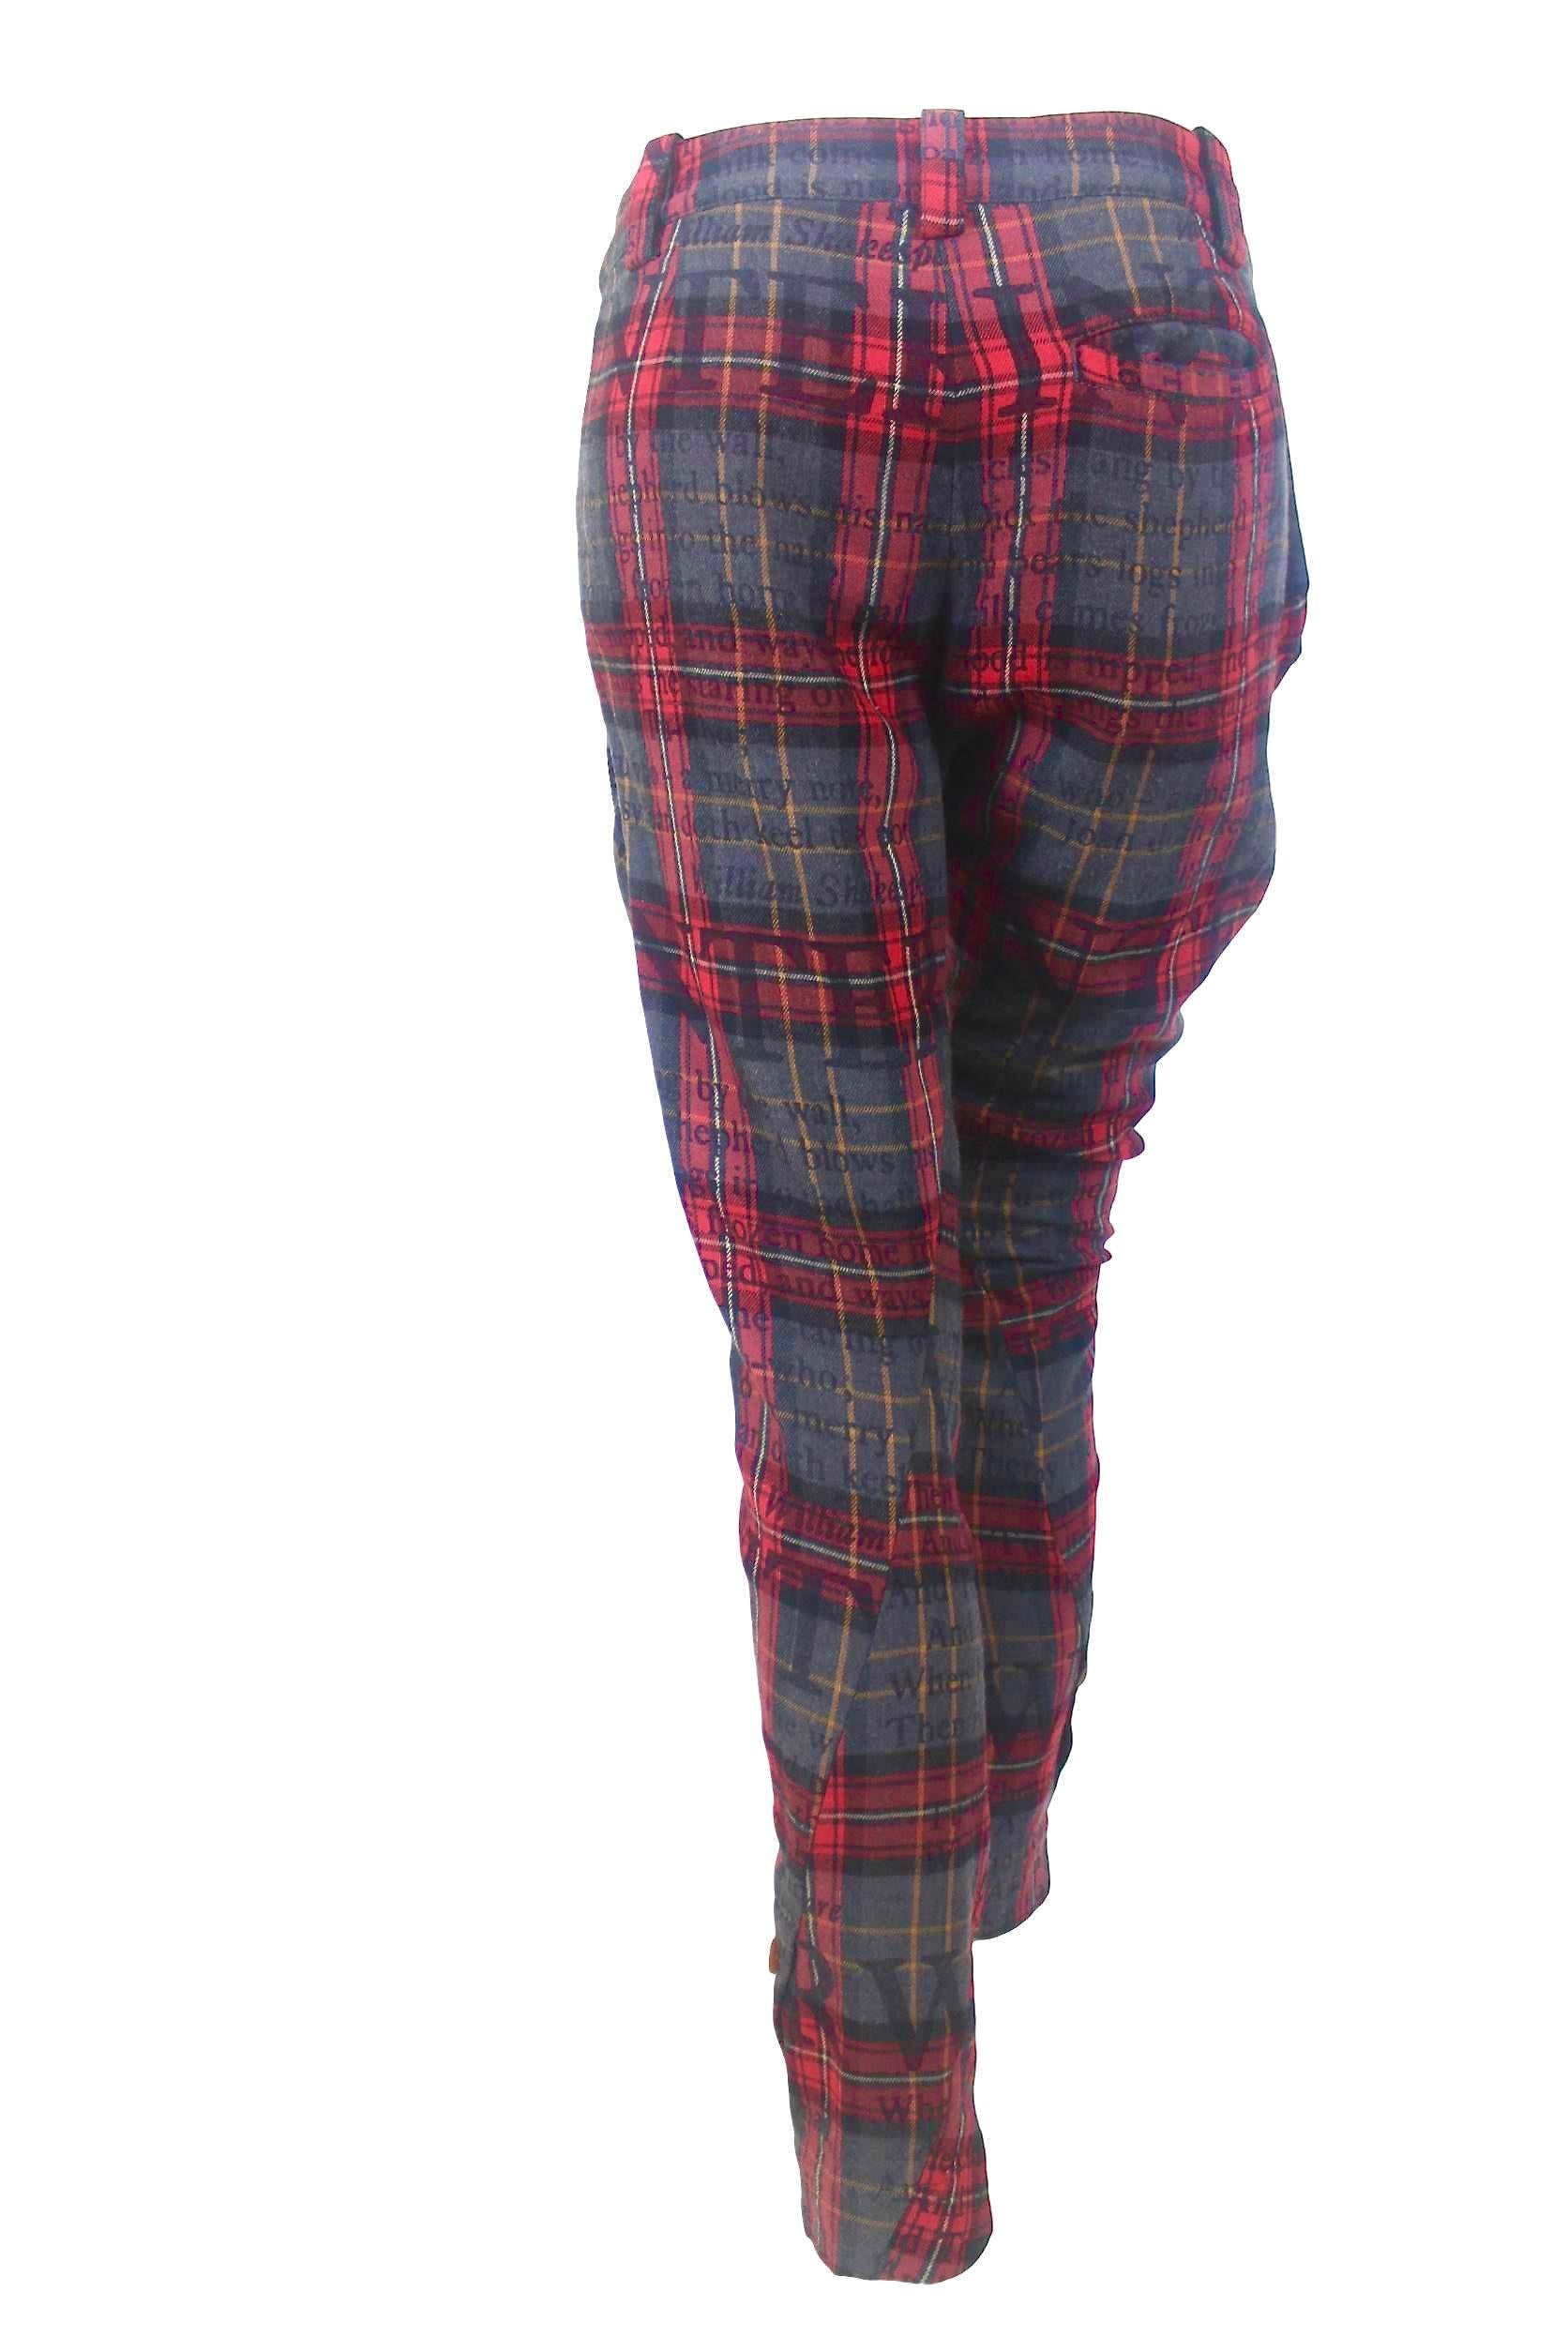 Vivienne Westwood Red Label Twisted Leg Tartan Trousers 3